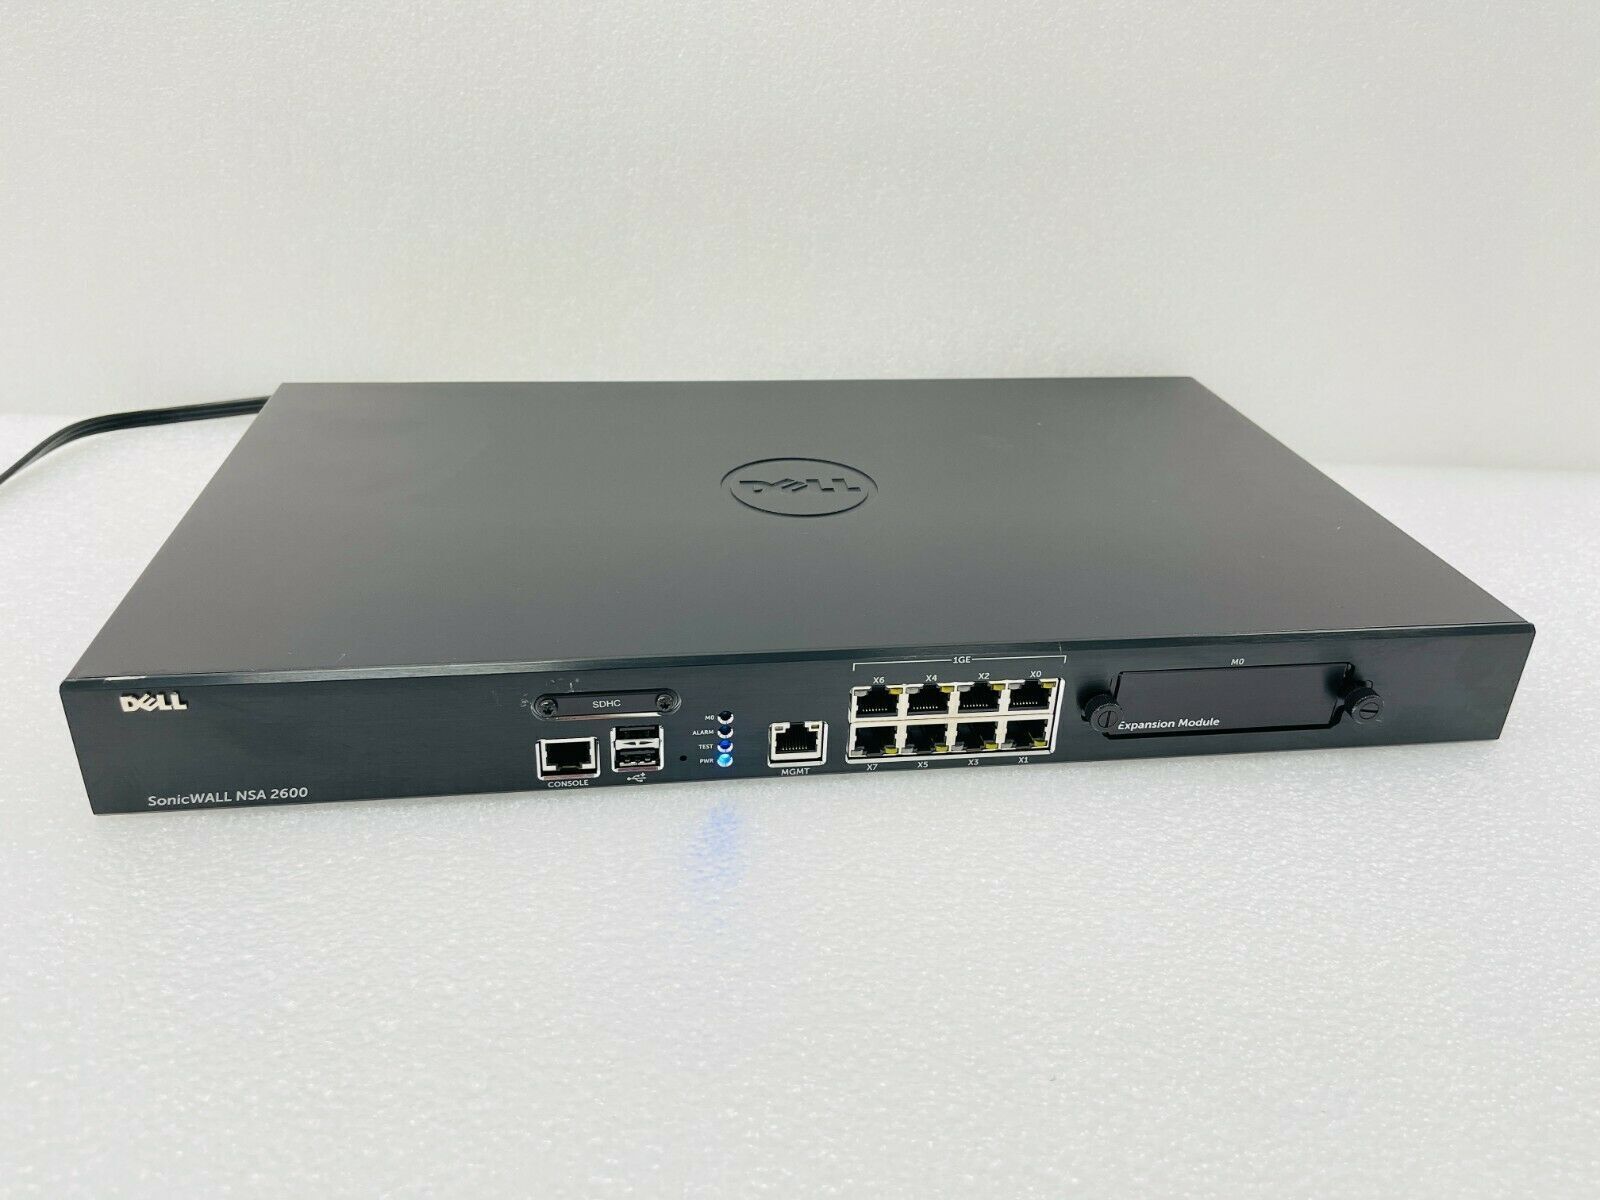 Dell SonicWall NSA2600 Firewall Appliance - read